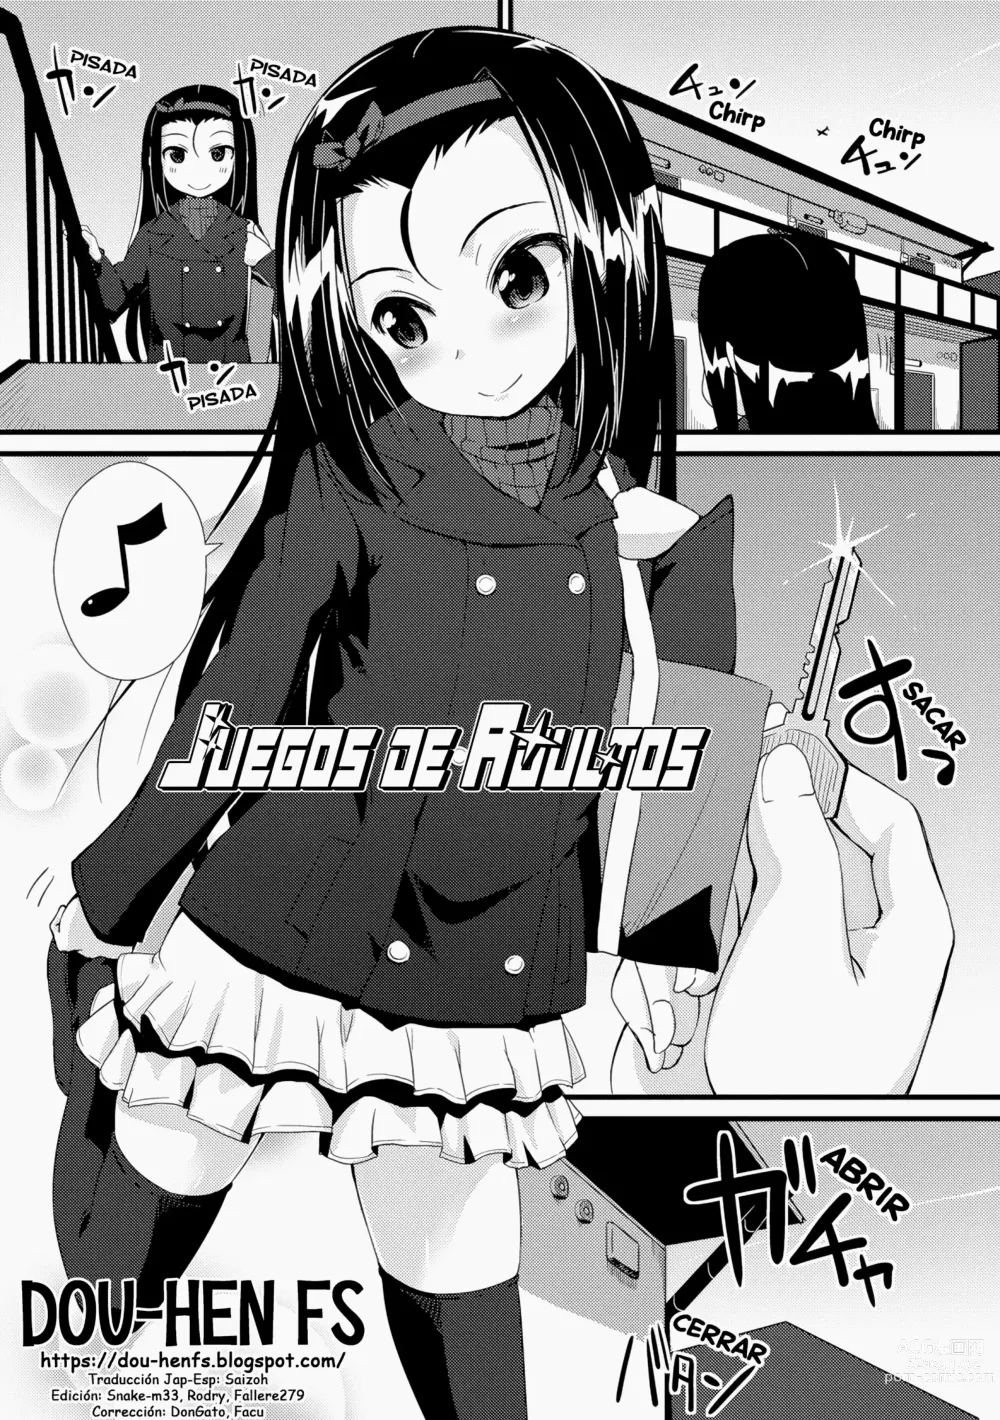 Page 1 of manga Juegos de adultos